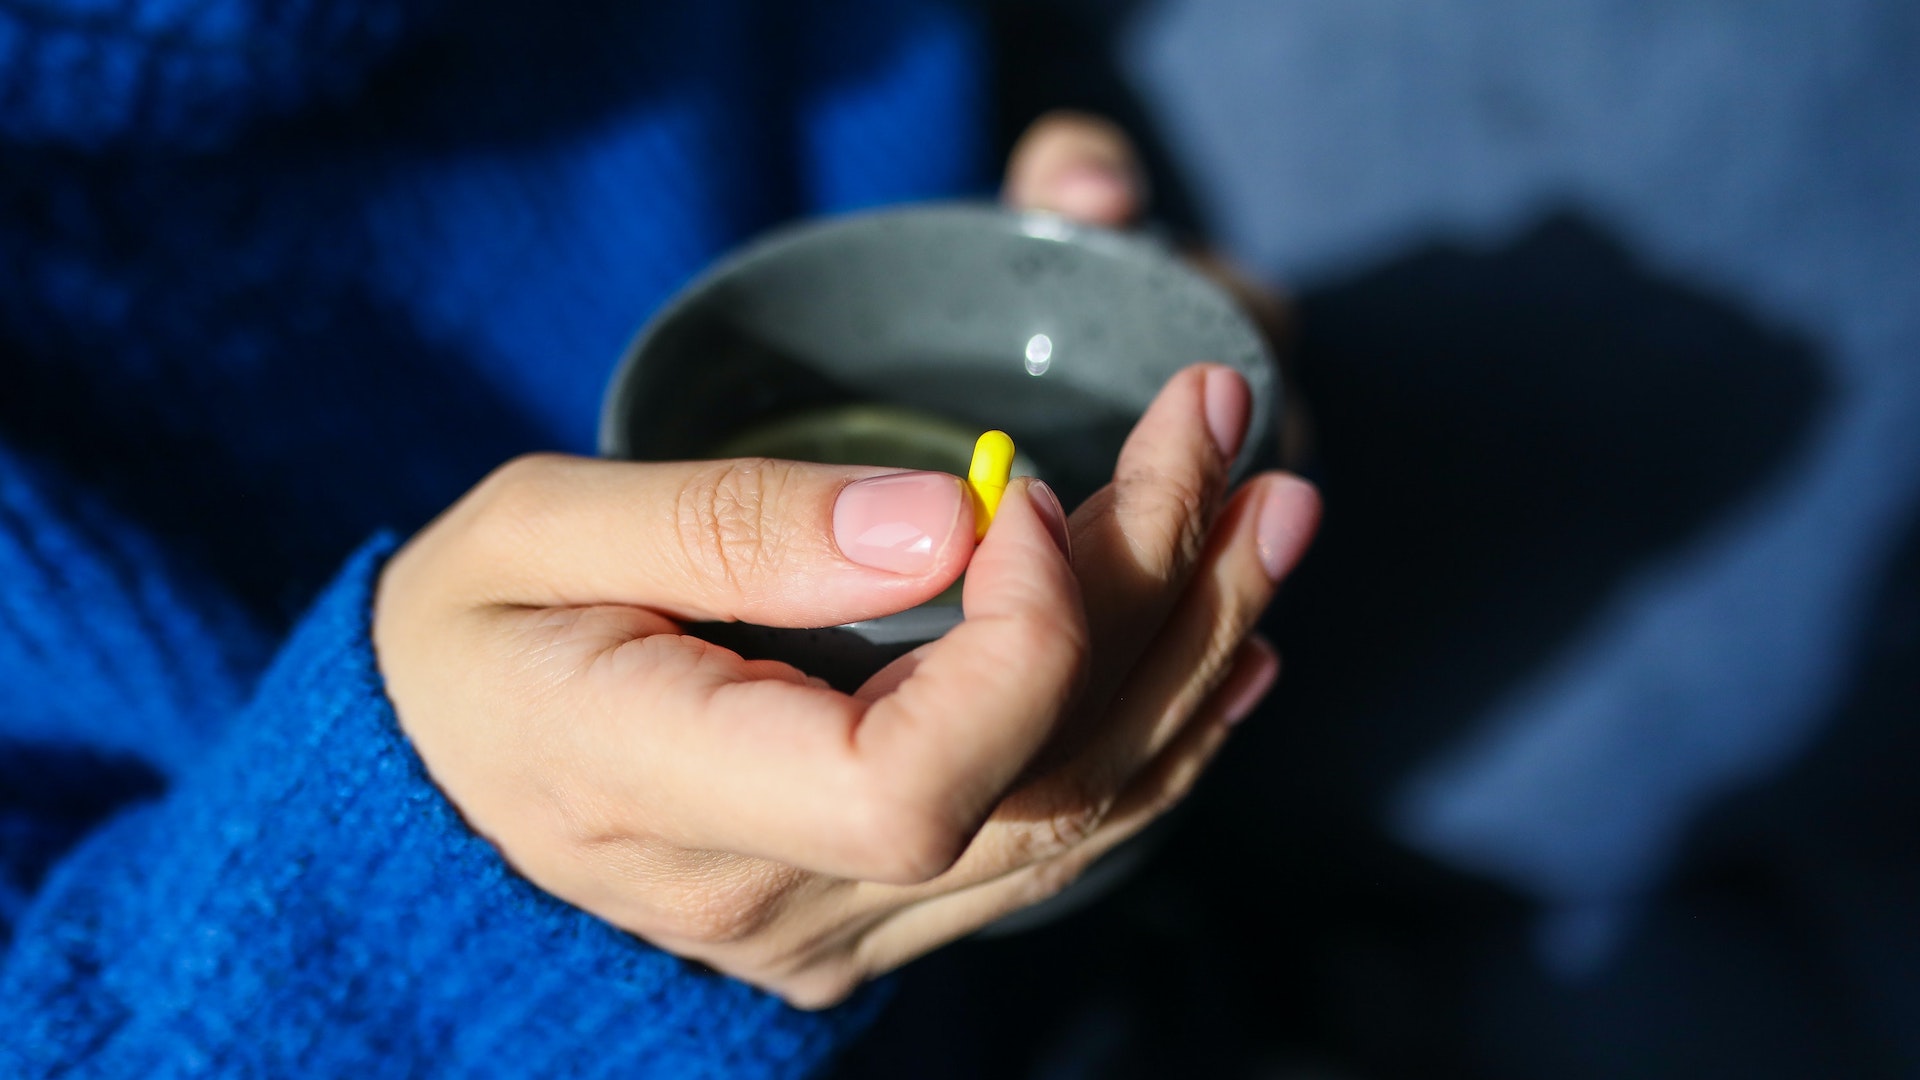 A woman's hand holding a mug, about to take a pill. Universal credit cut